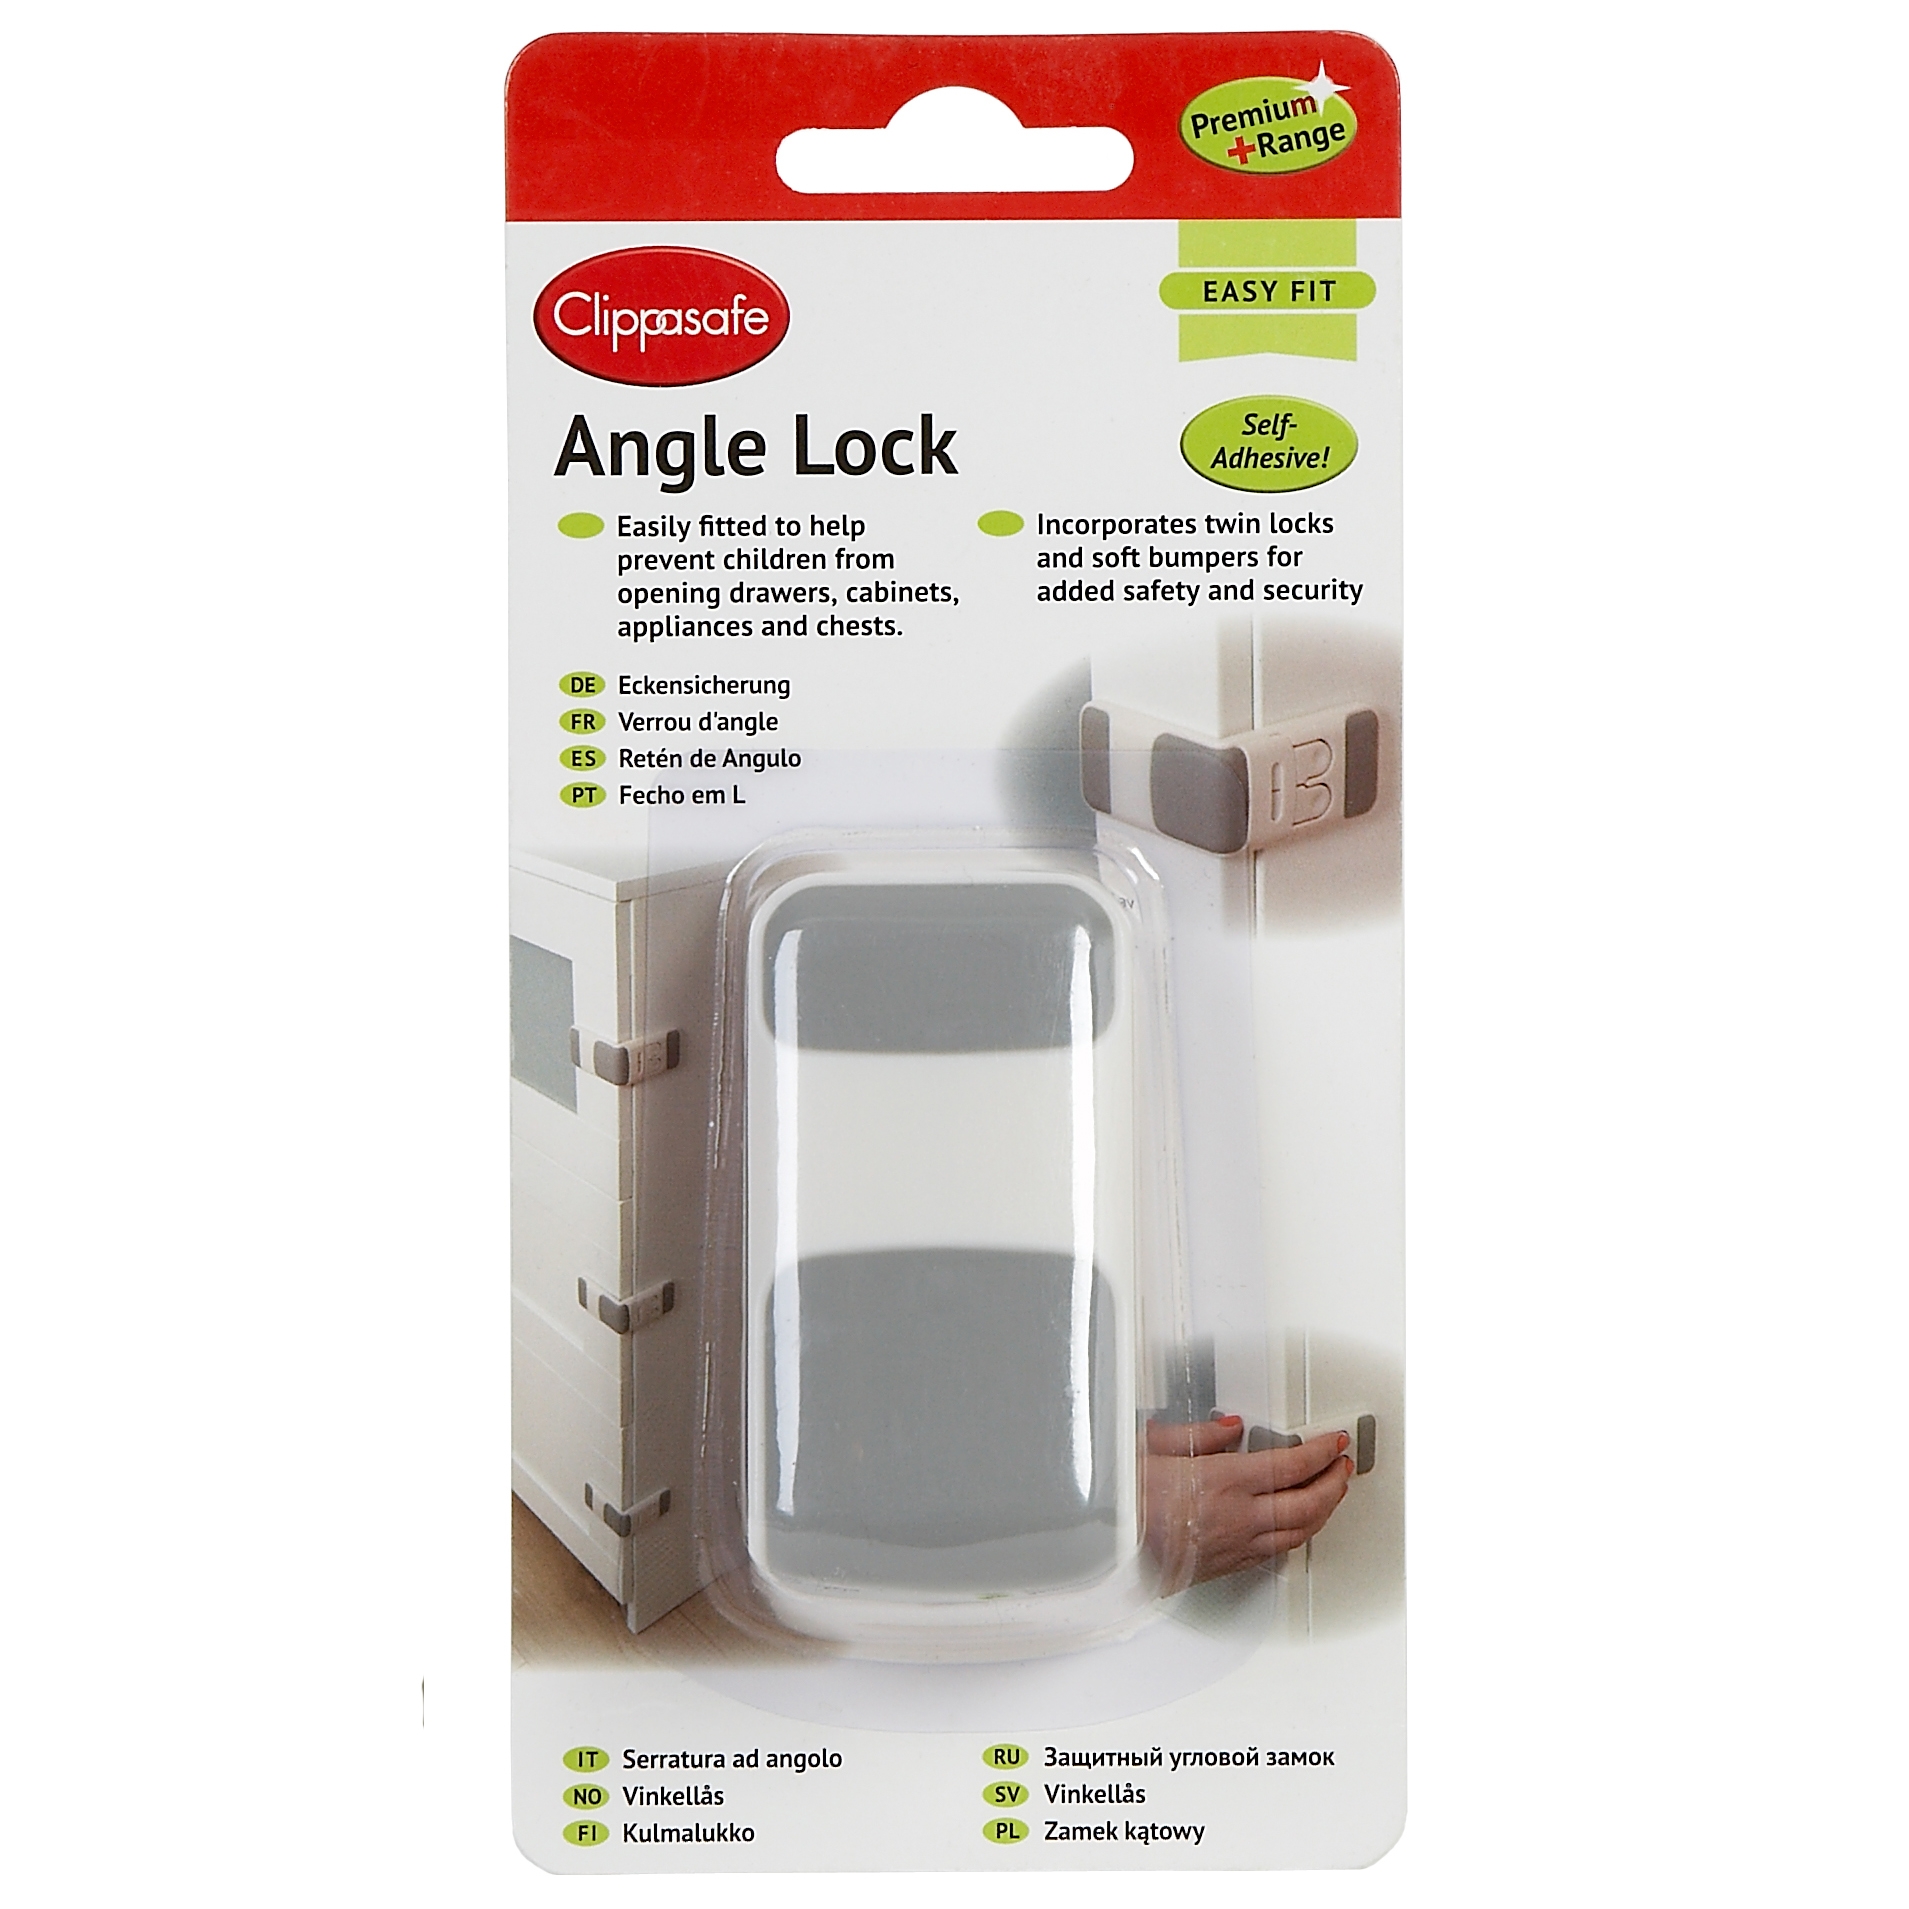 Angle Lock - Premium+ Range - Clippasafe